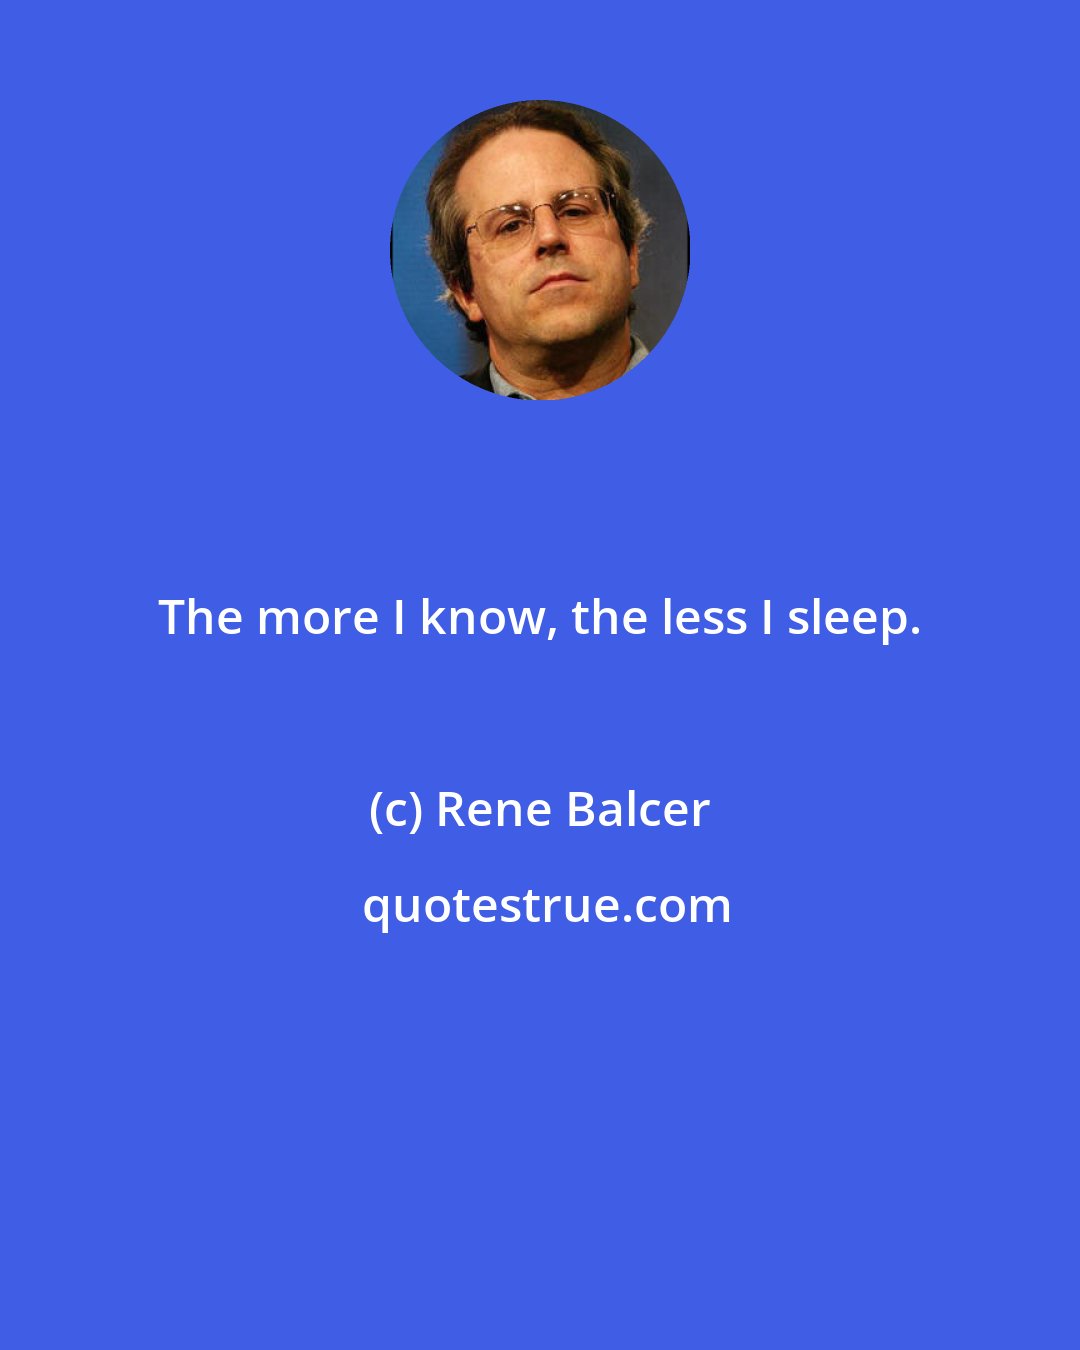 Rene Balcer: The more I know, the less I sleep.